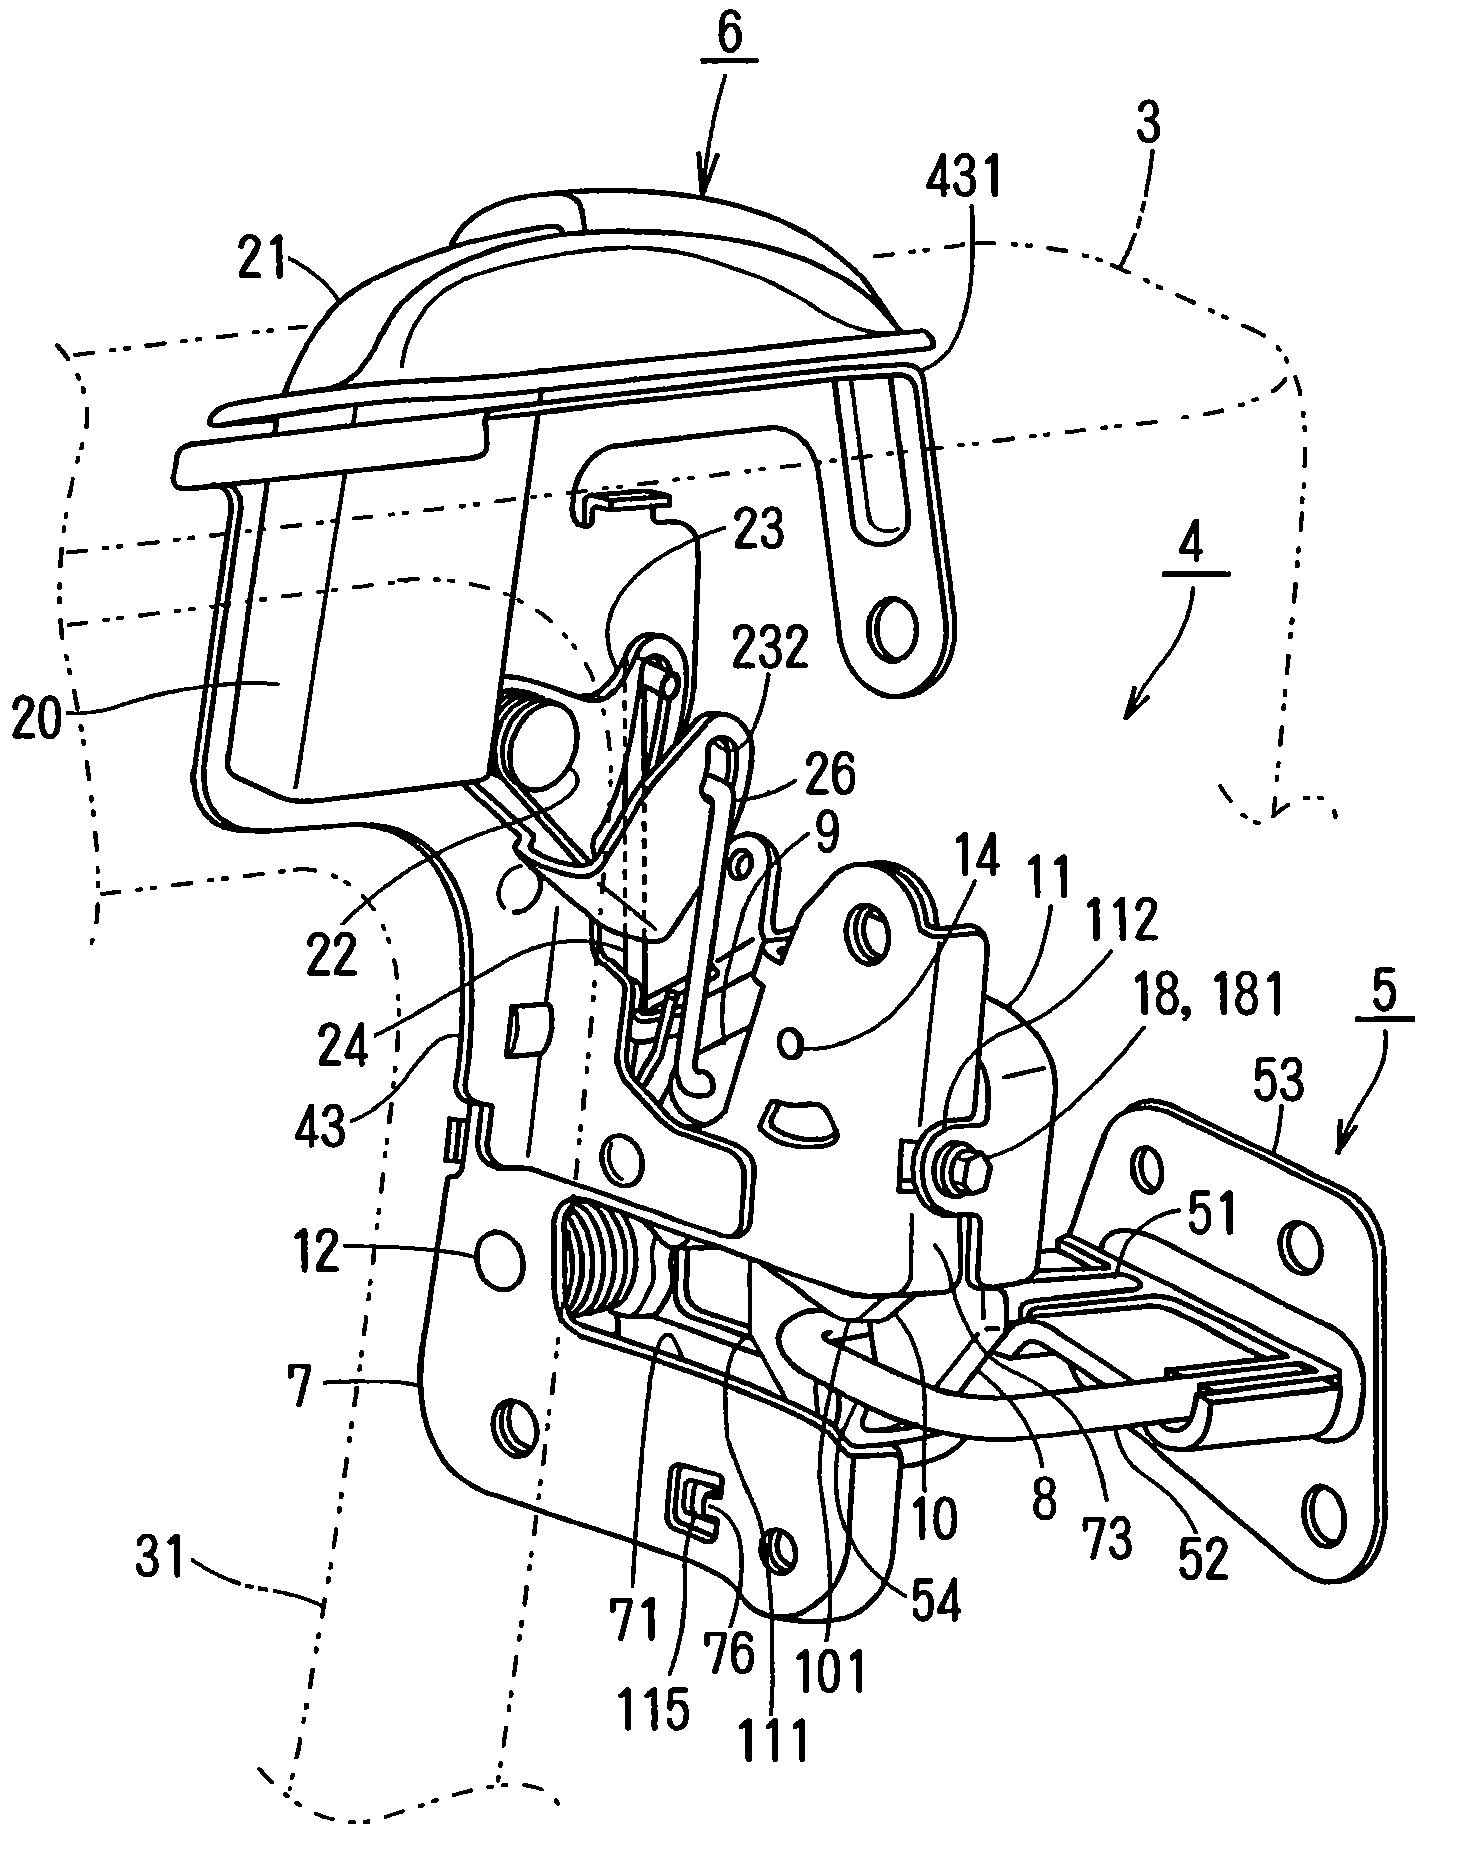 Vehicle seat lock